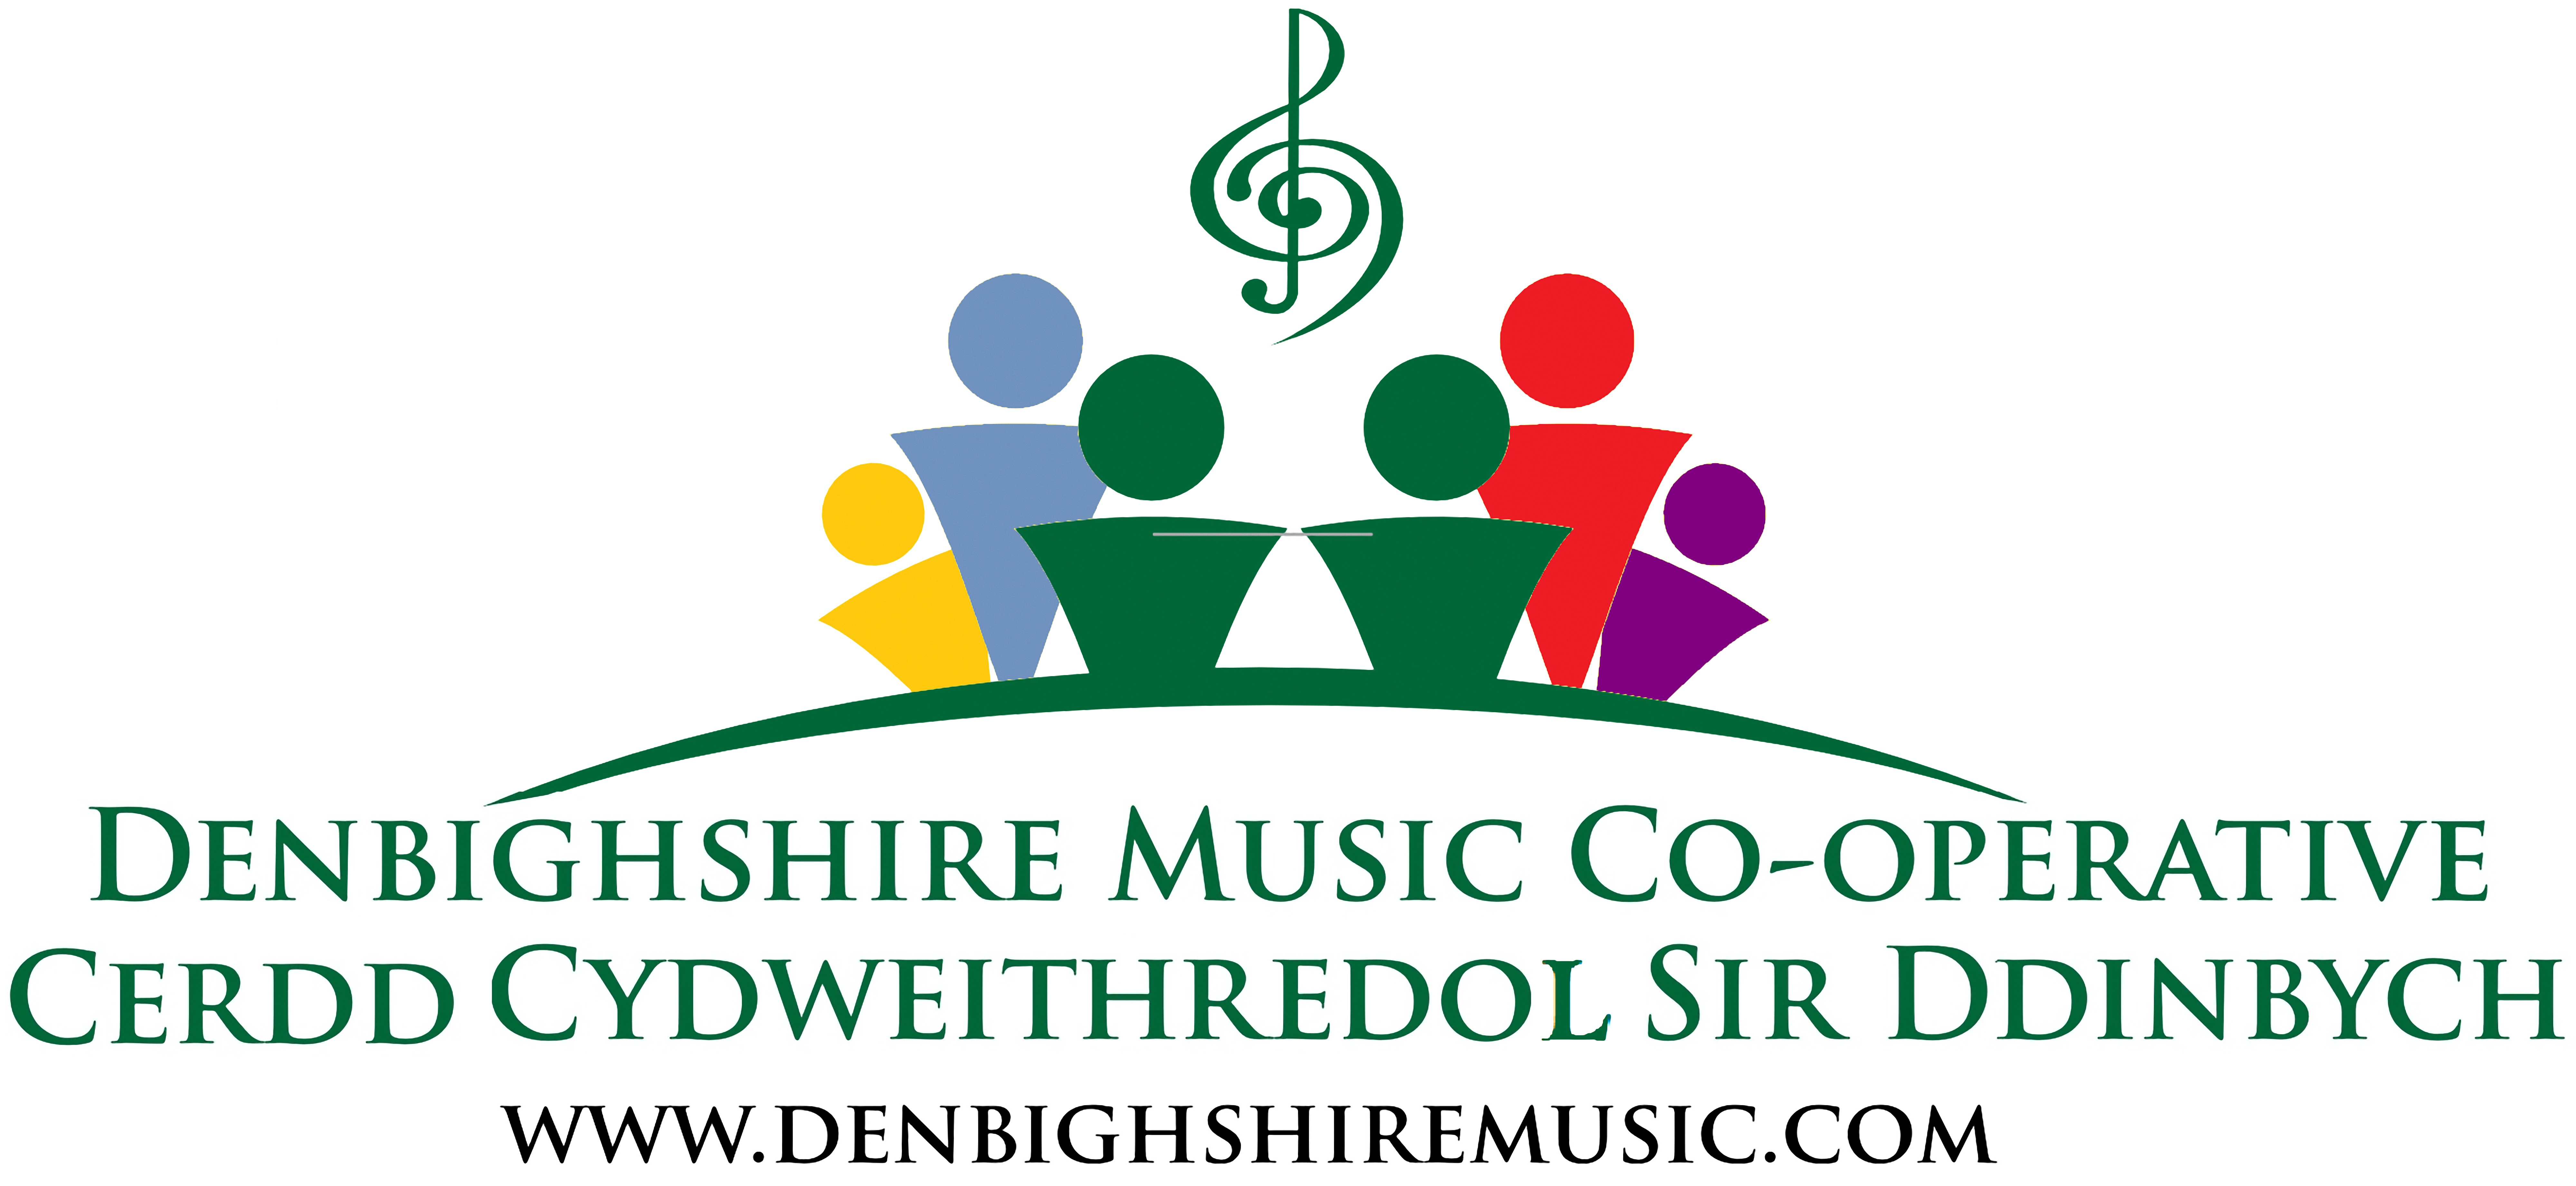 Denbighshire Music Co-operative logo